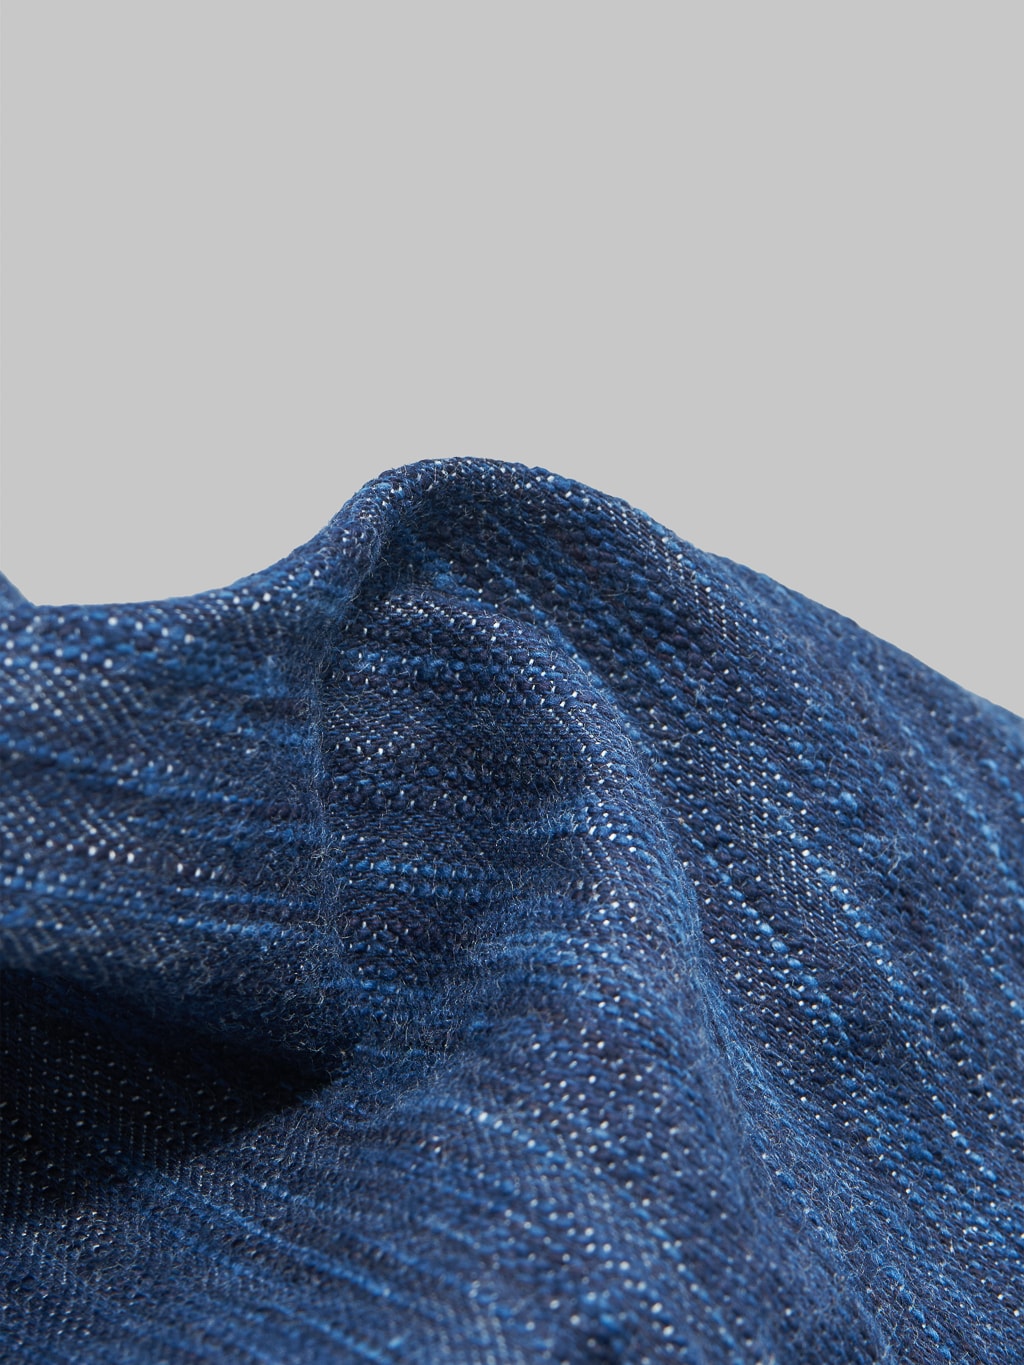 Studio dartisan tokushima awa shoai regular straight jeans fabric texture